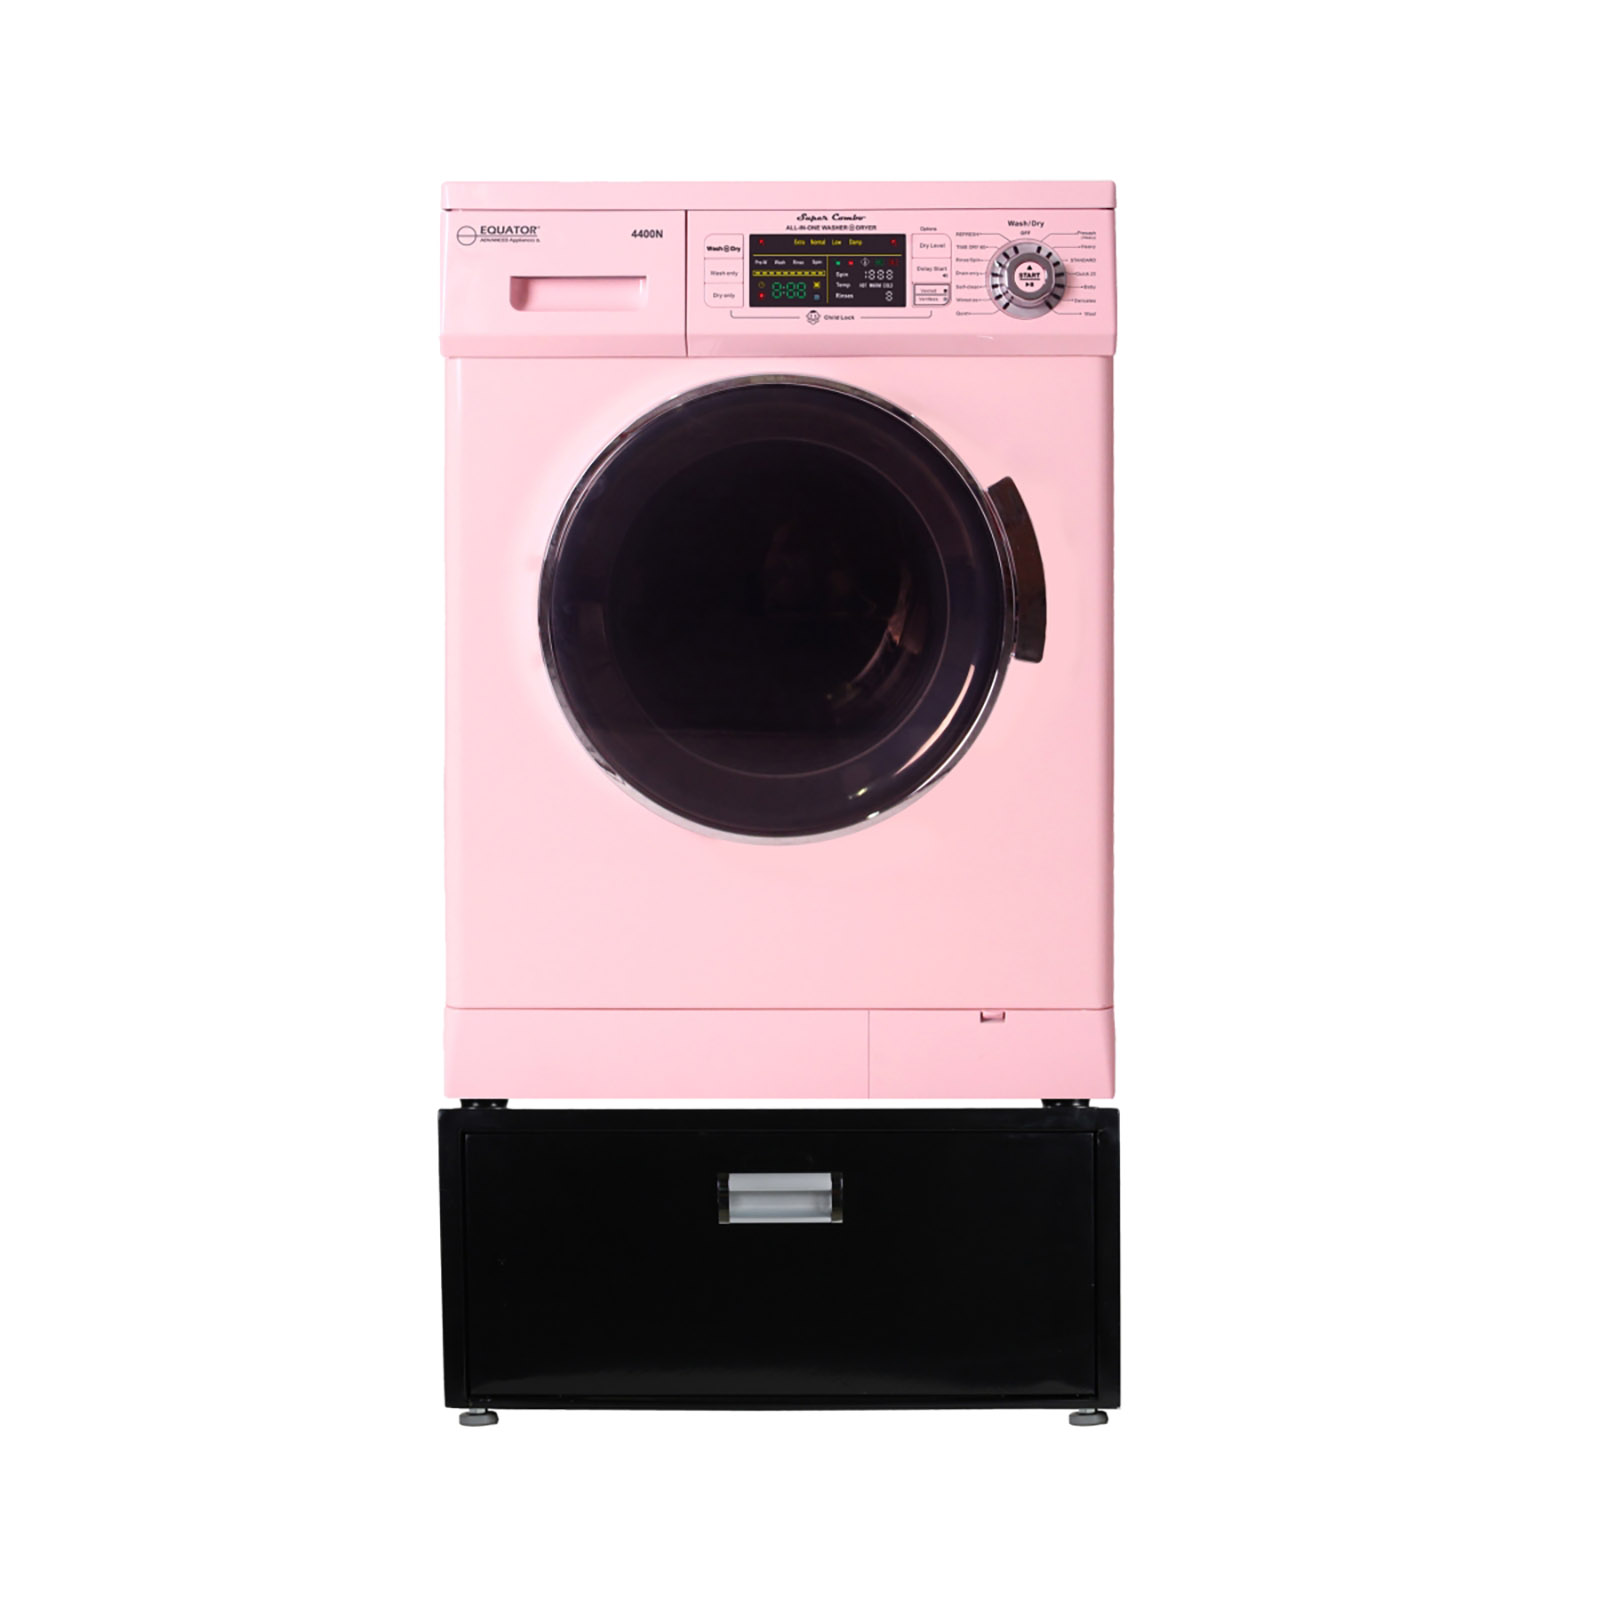 Equator EZ4400N-PinkV25PDL4455Black Compact Vented & Ventless Combination Washer Dryer – Pink and Black